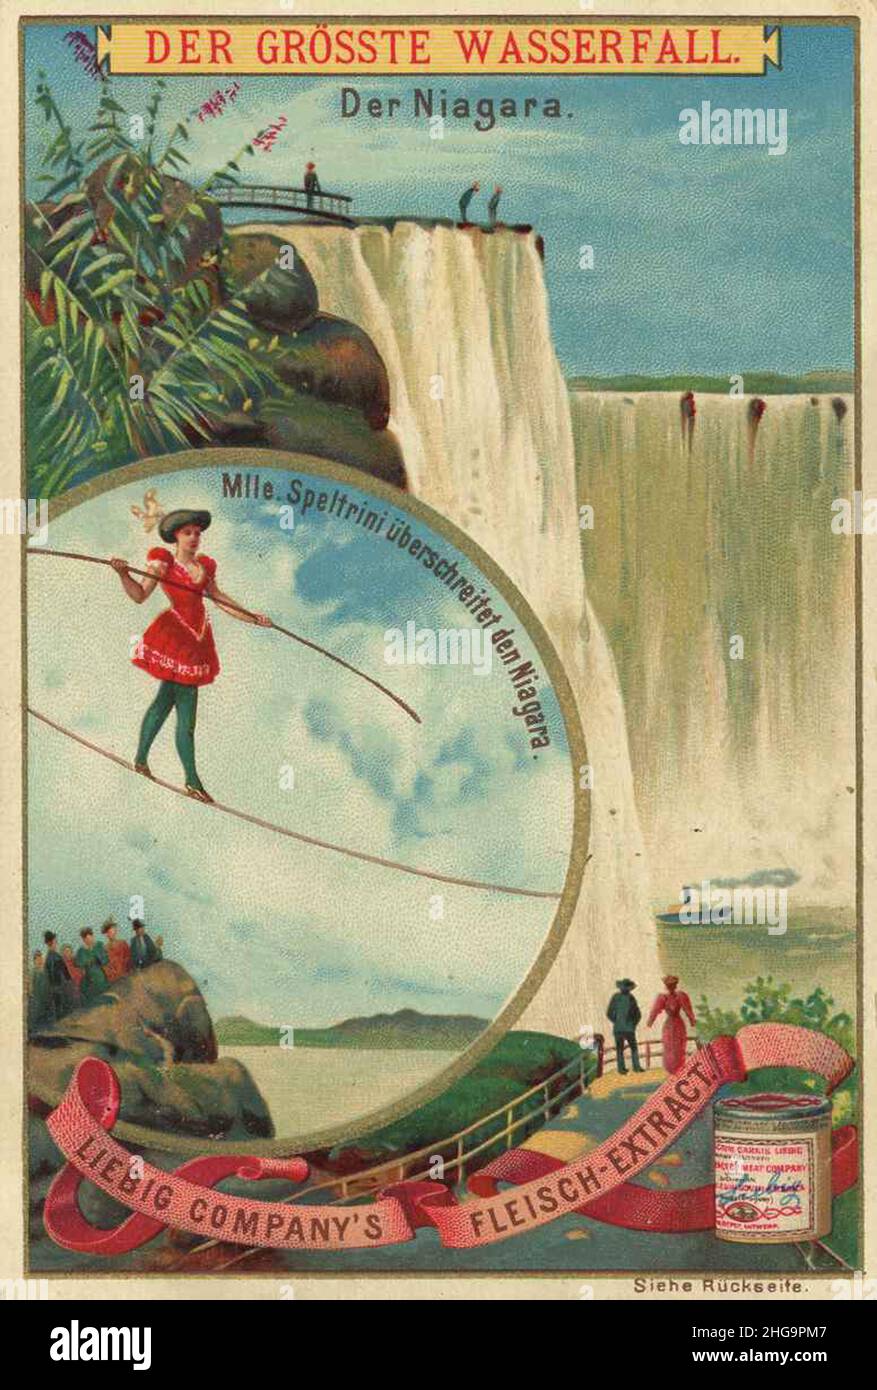 Bilderserie das Größte, hier der größte Wasserfall, Niagara, Liebigbild, reproducción digital mejorada de una imagen coleccionable de la compañía Liebig, estimada a partir de 1900, pd / digital restaurierte Reproduktion eines Sammelbildes von ca 1900, gemeinfrei, Foto de stock